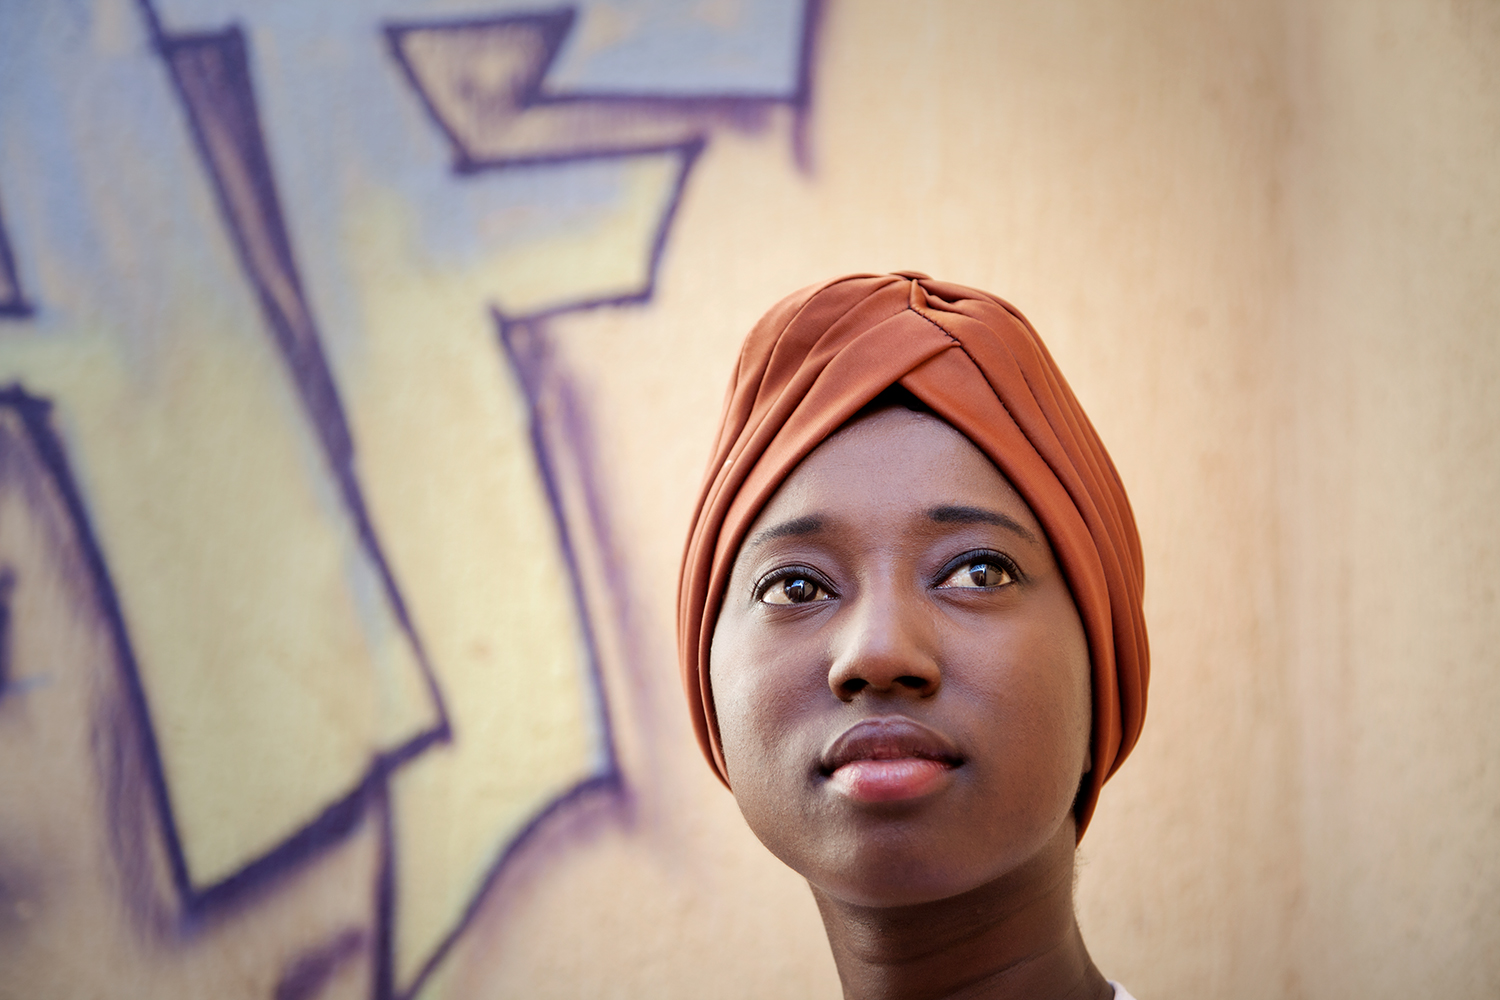 Malika 'La Slammeuse' photographed by Leila Alaoui in Ouagadougou, Burkina Faso, on 13 January 2016, as part of the My Body My Rights campaign.